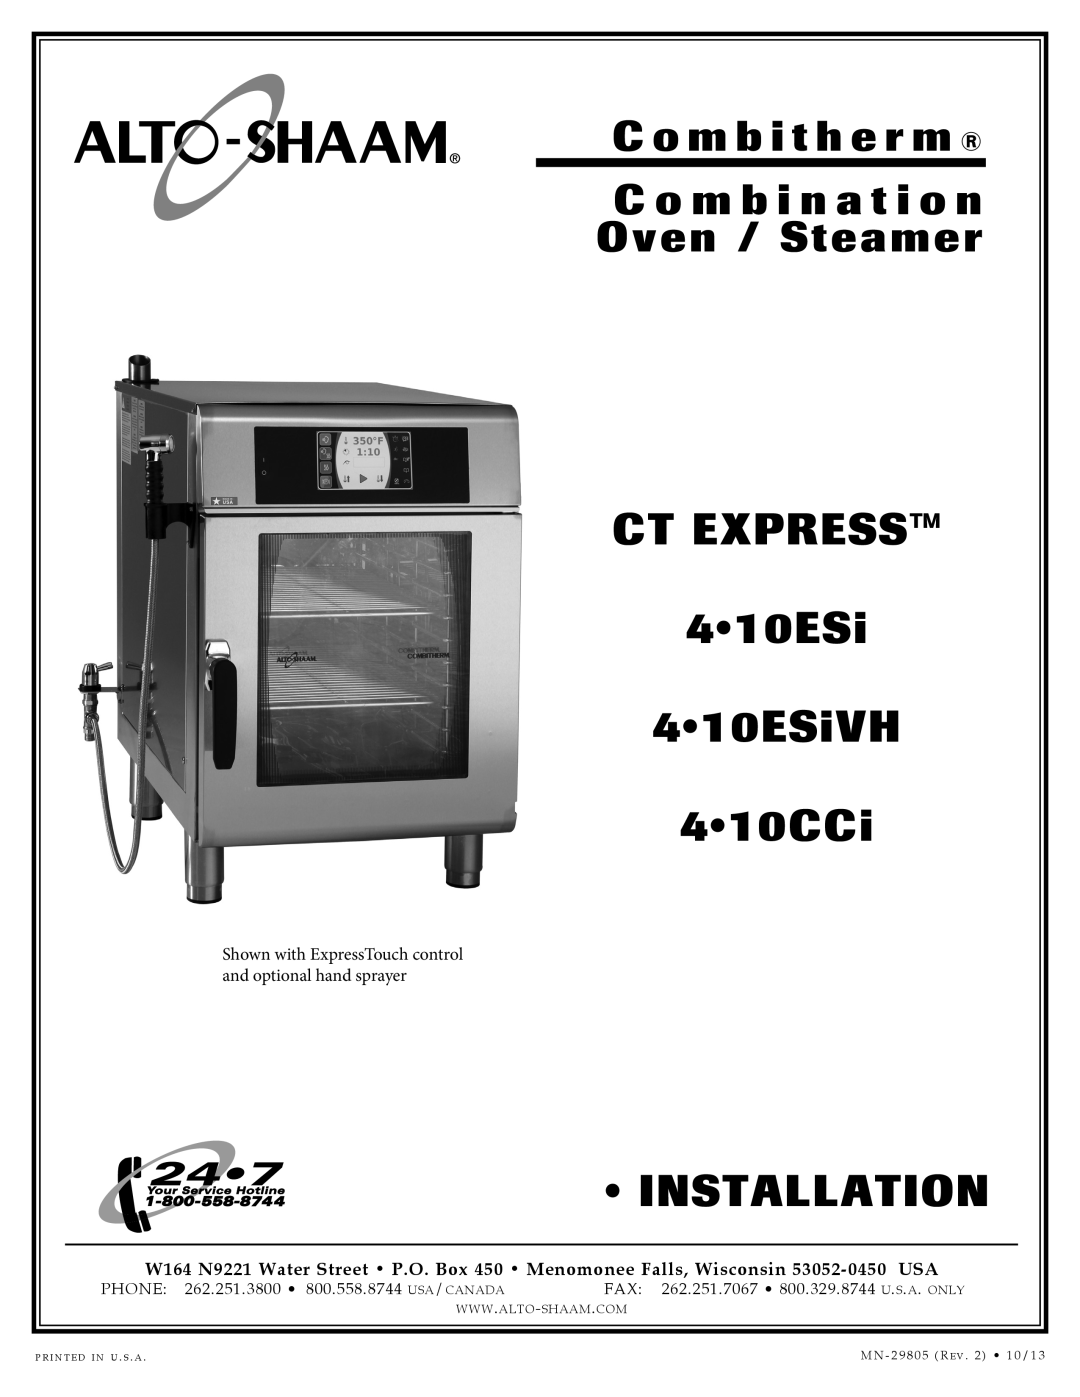 Alto-Shaam Combination Oven/Steamer manual Ct Express, 410ESiVH, 410CCi, Installation, C o m b i t h e r m 